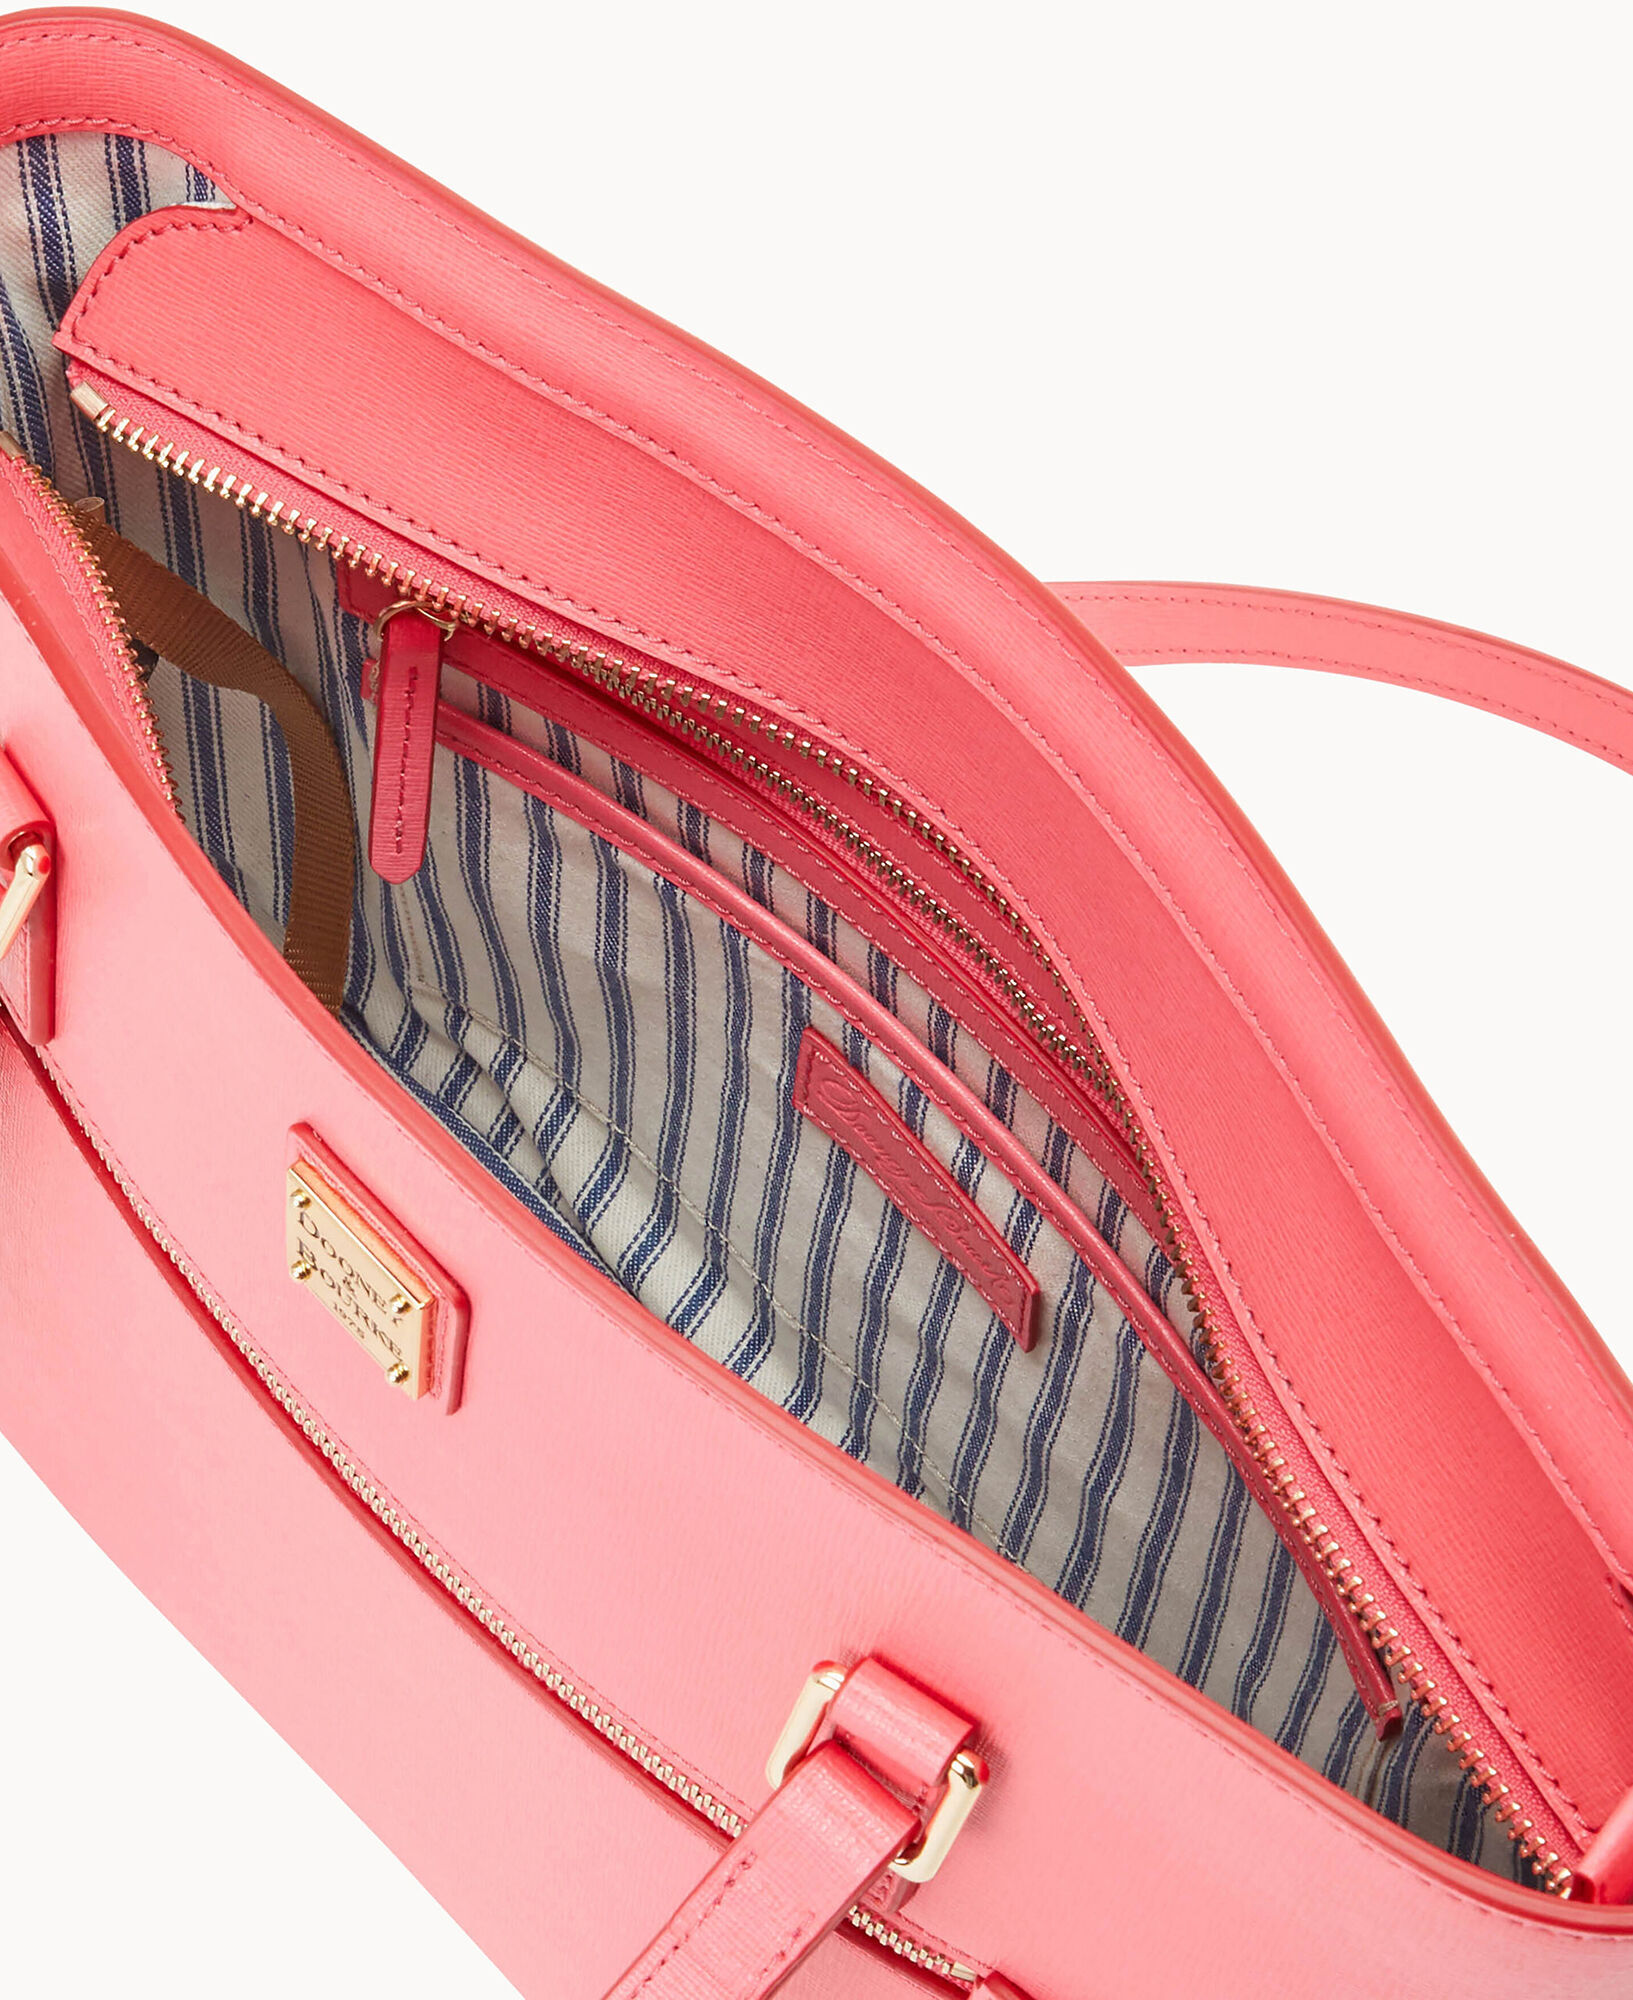 Dooney Bourke Saffiano Shopper Tote Bag, Pink